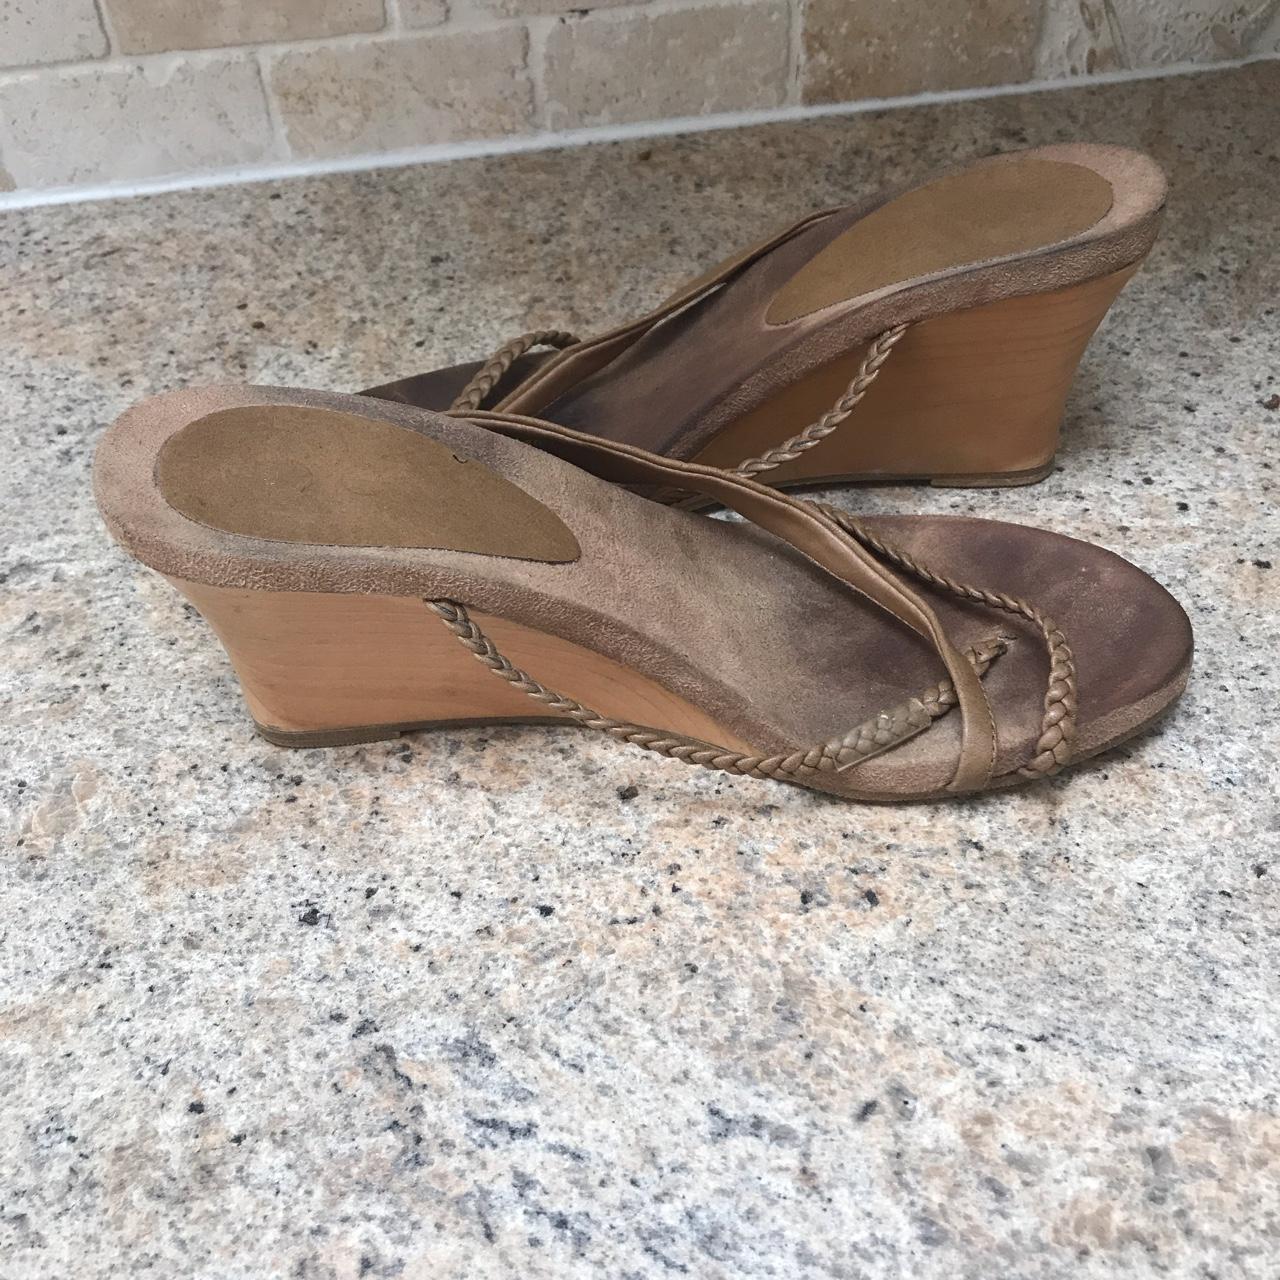 Toe sandals- 3” wedge. Size 7. Happy to do bundles - Depop